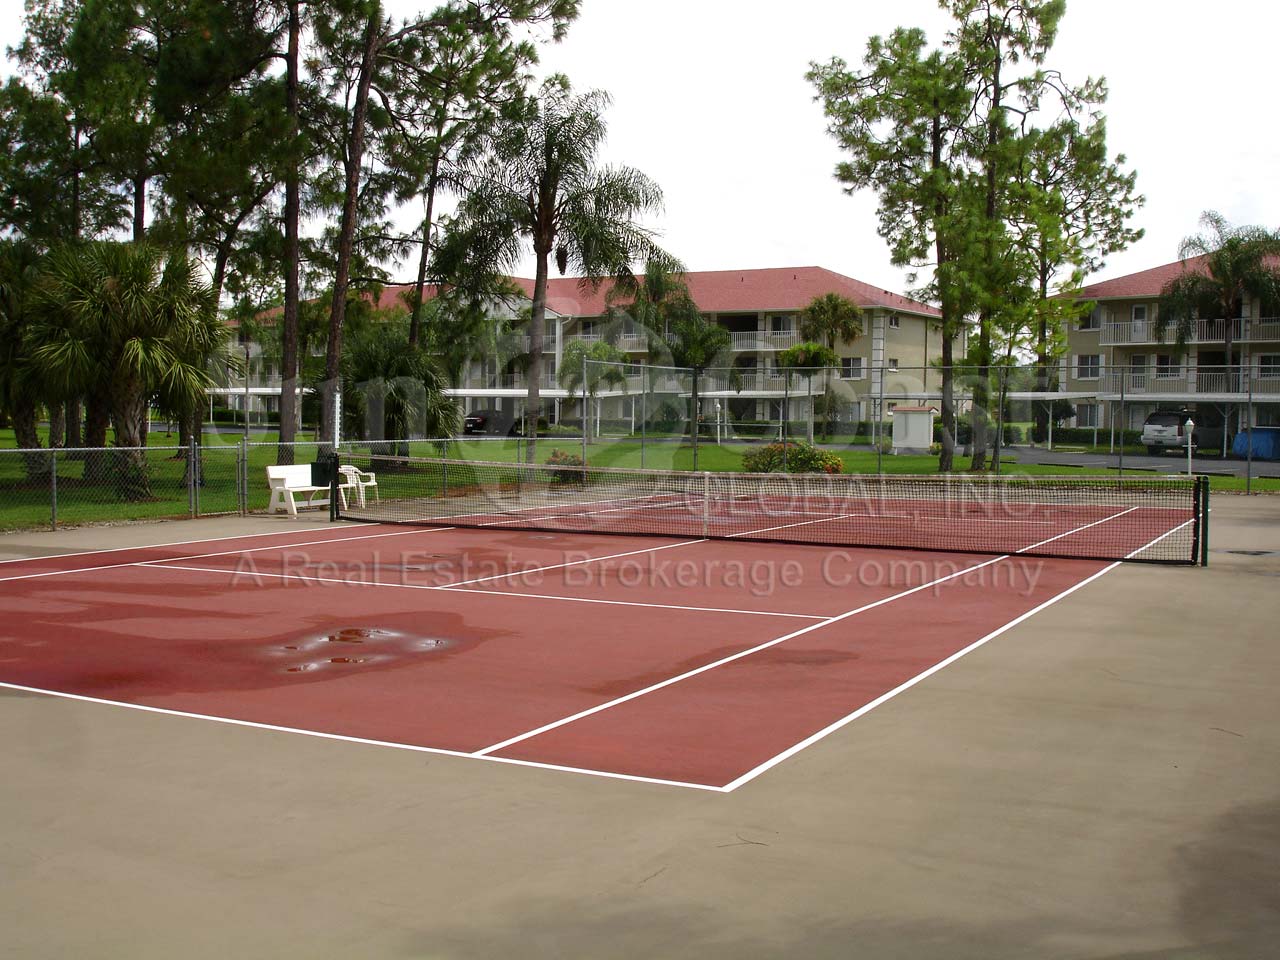 Andover Square tennis courts